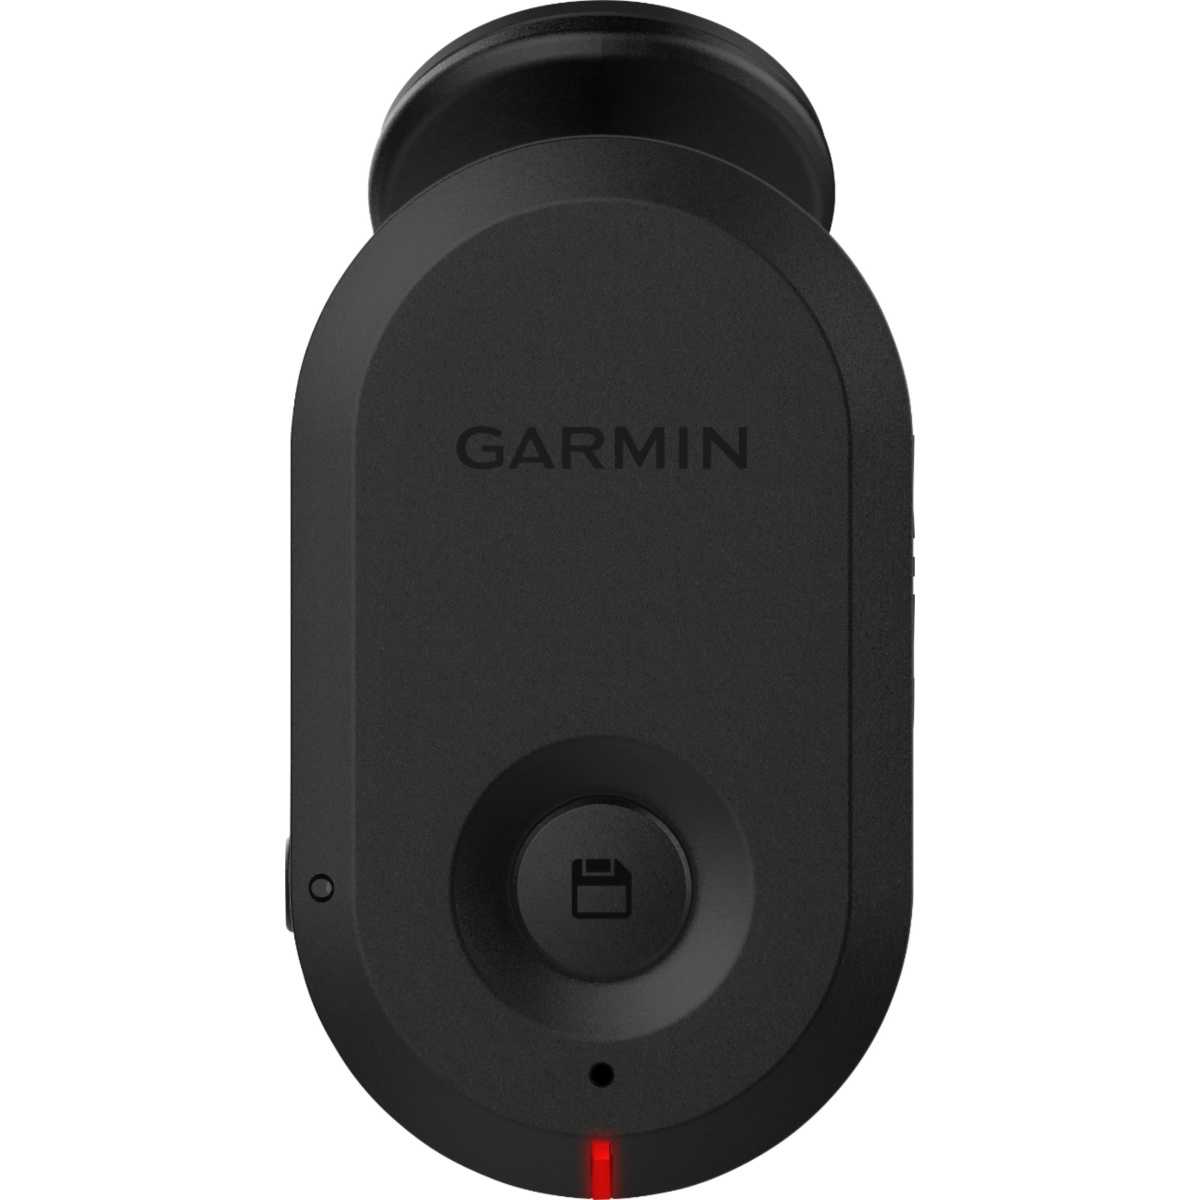 Garmin Mini Dash Camera 010-02062-00